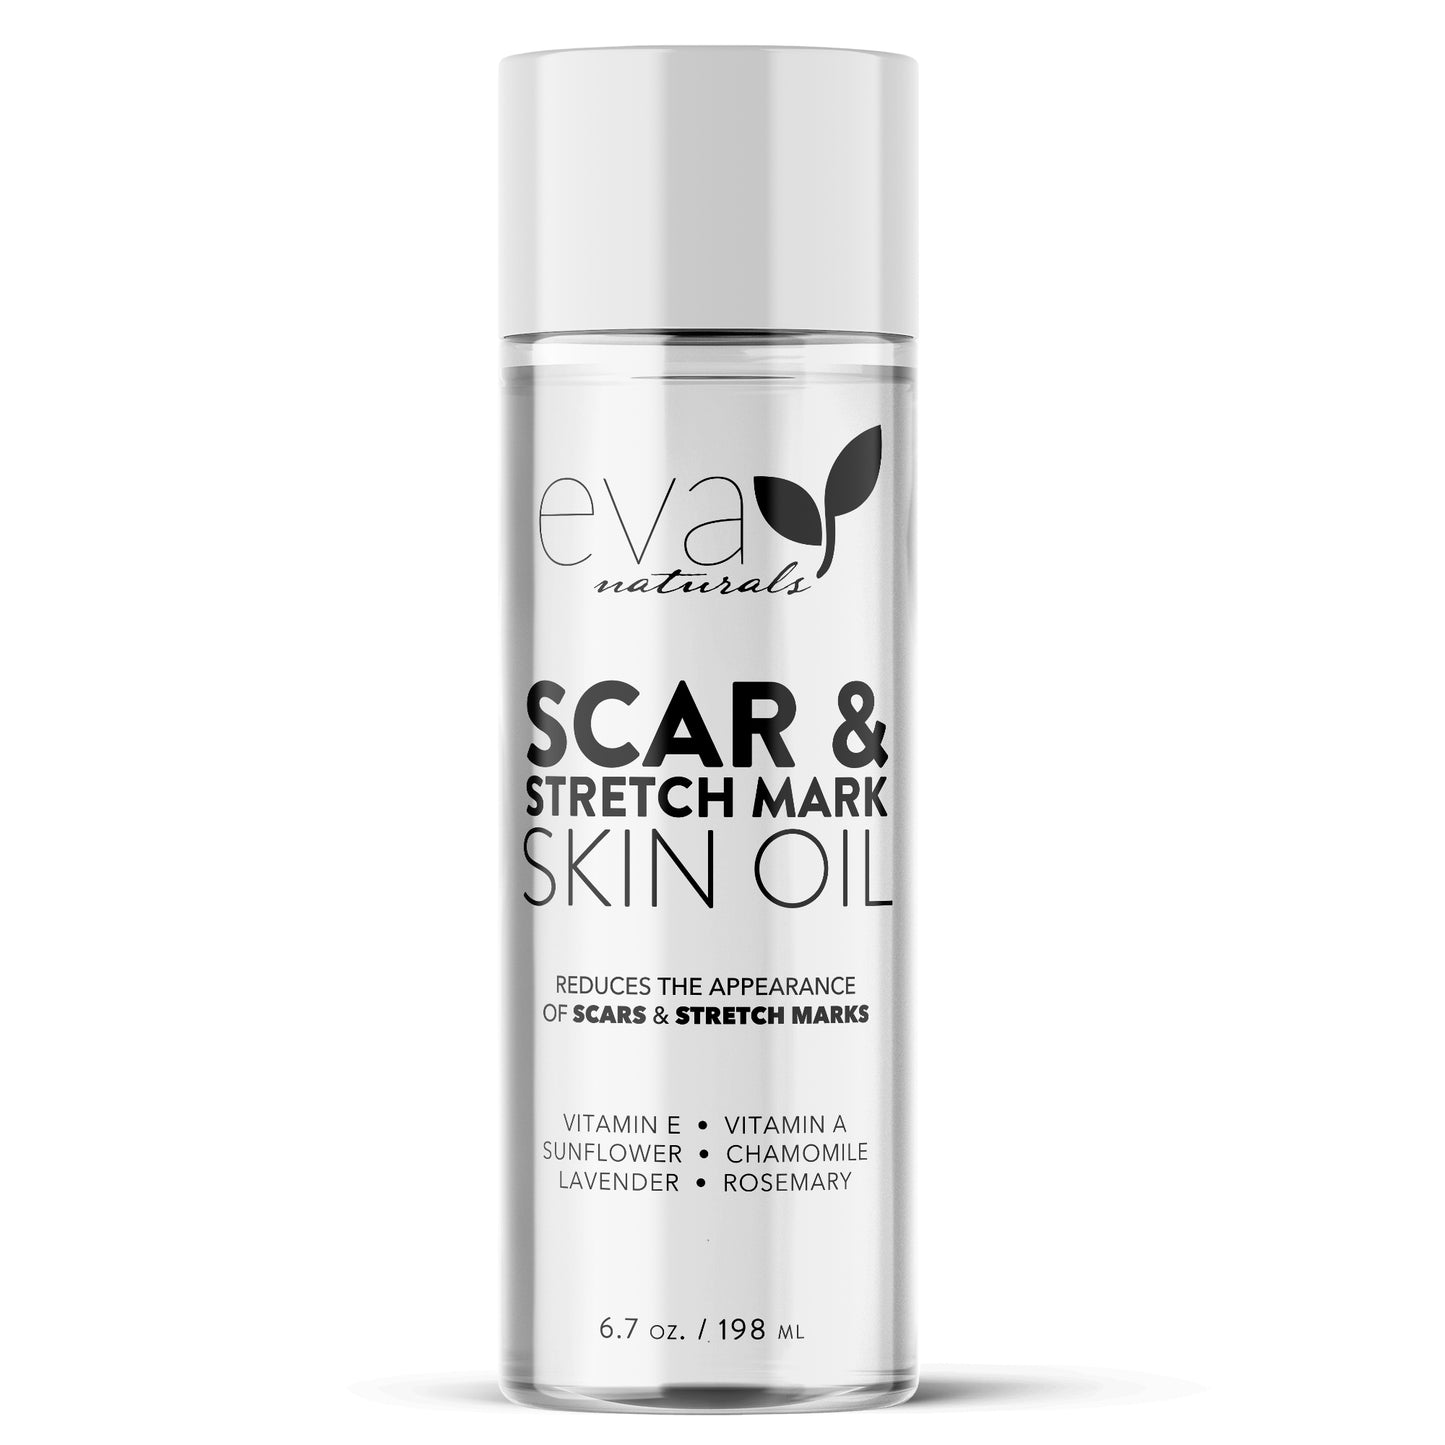 Scar & Stretch Mark Skin Oil